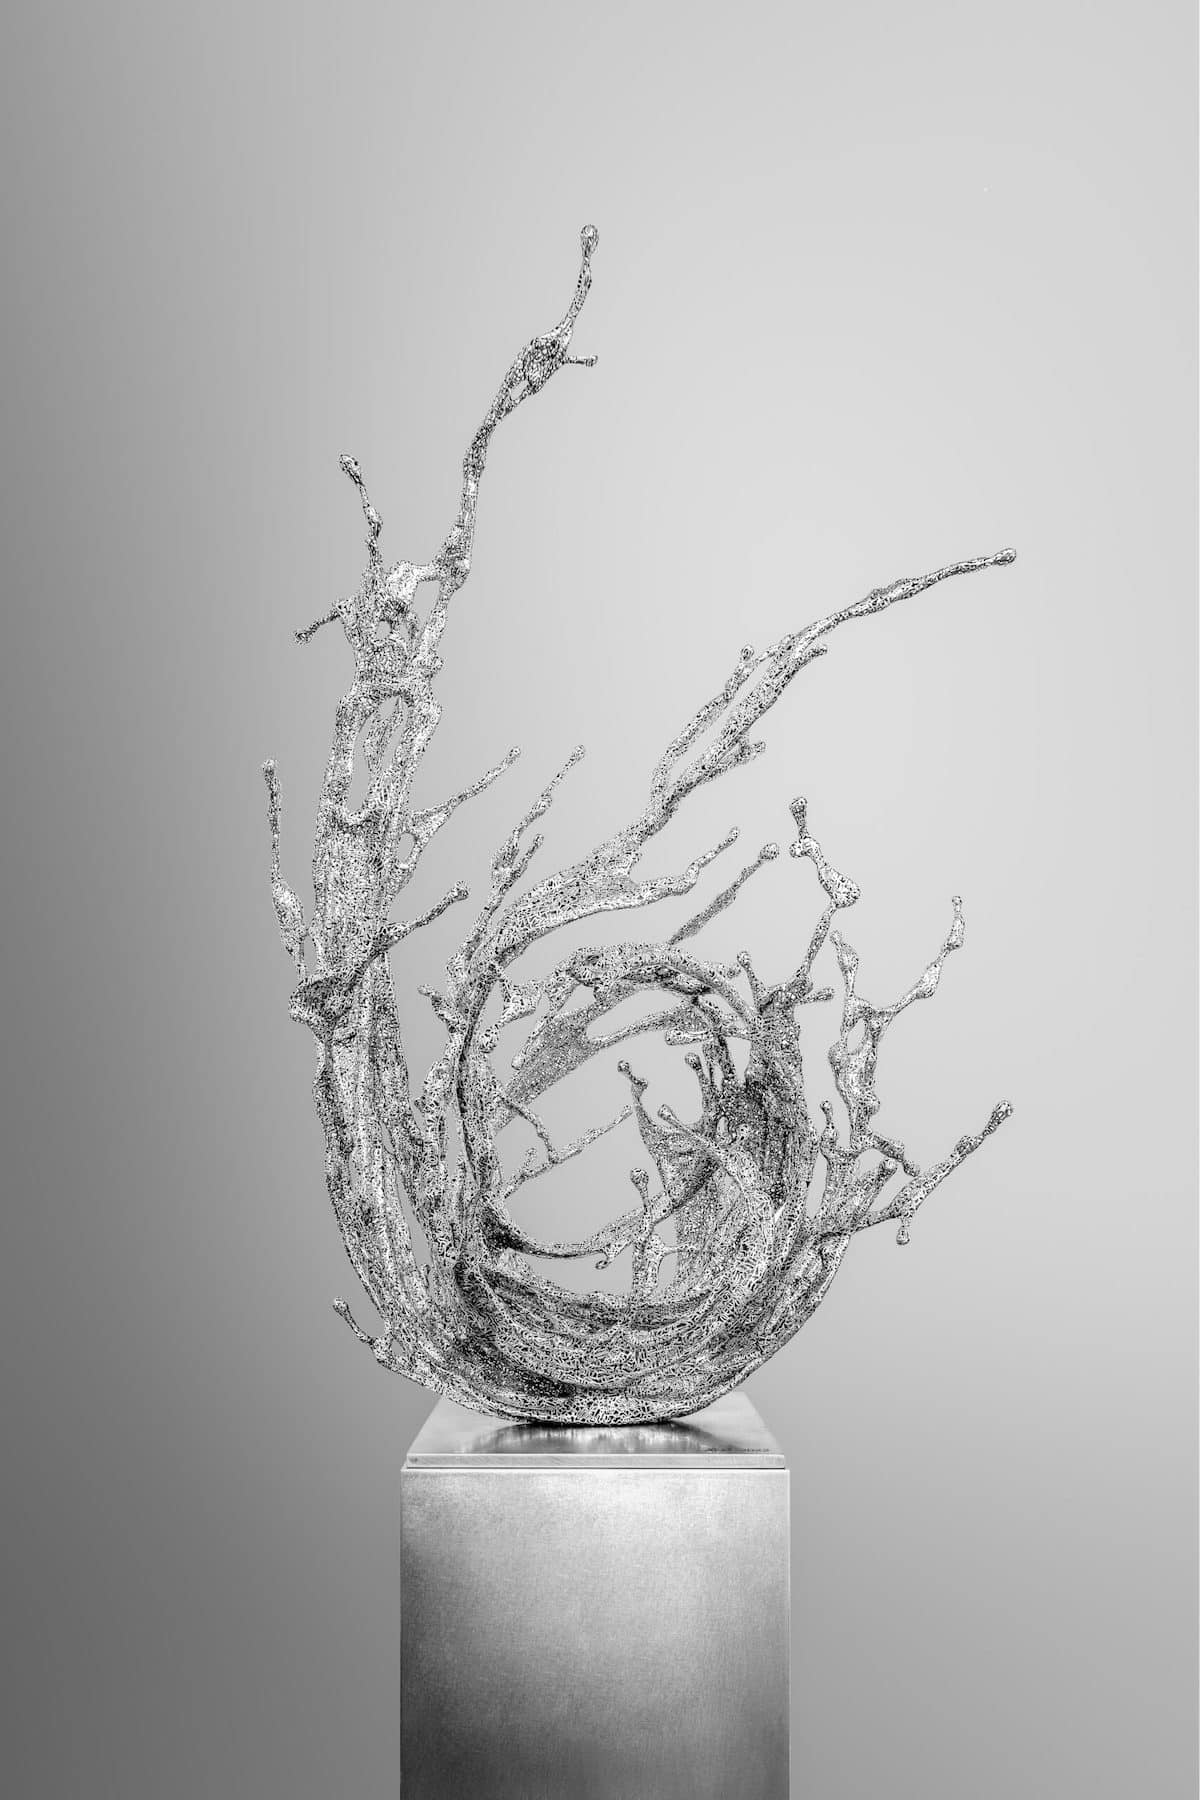 Splashing Water, Stunning Fluid Shaped Metal Sculptures By Zheng Lu (2)